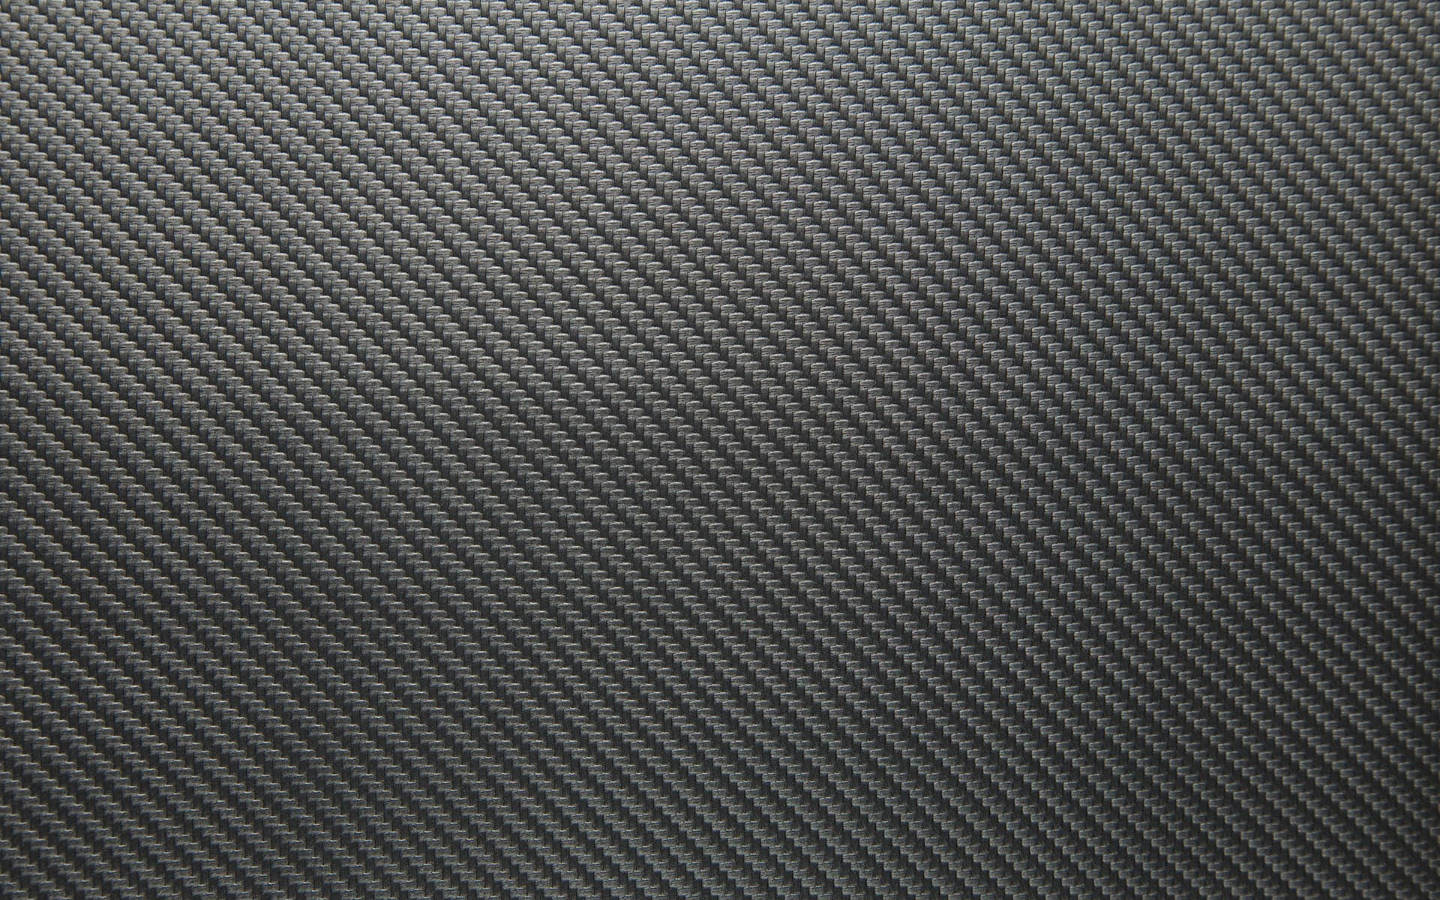 Carbon Fiber Texture In 4k Wallpaper